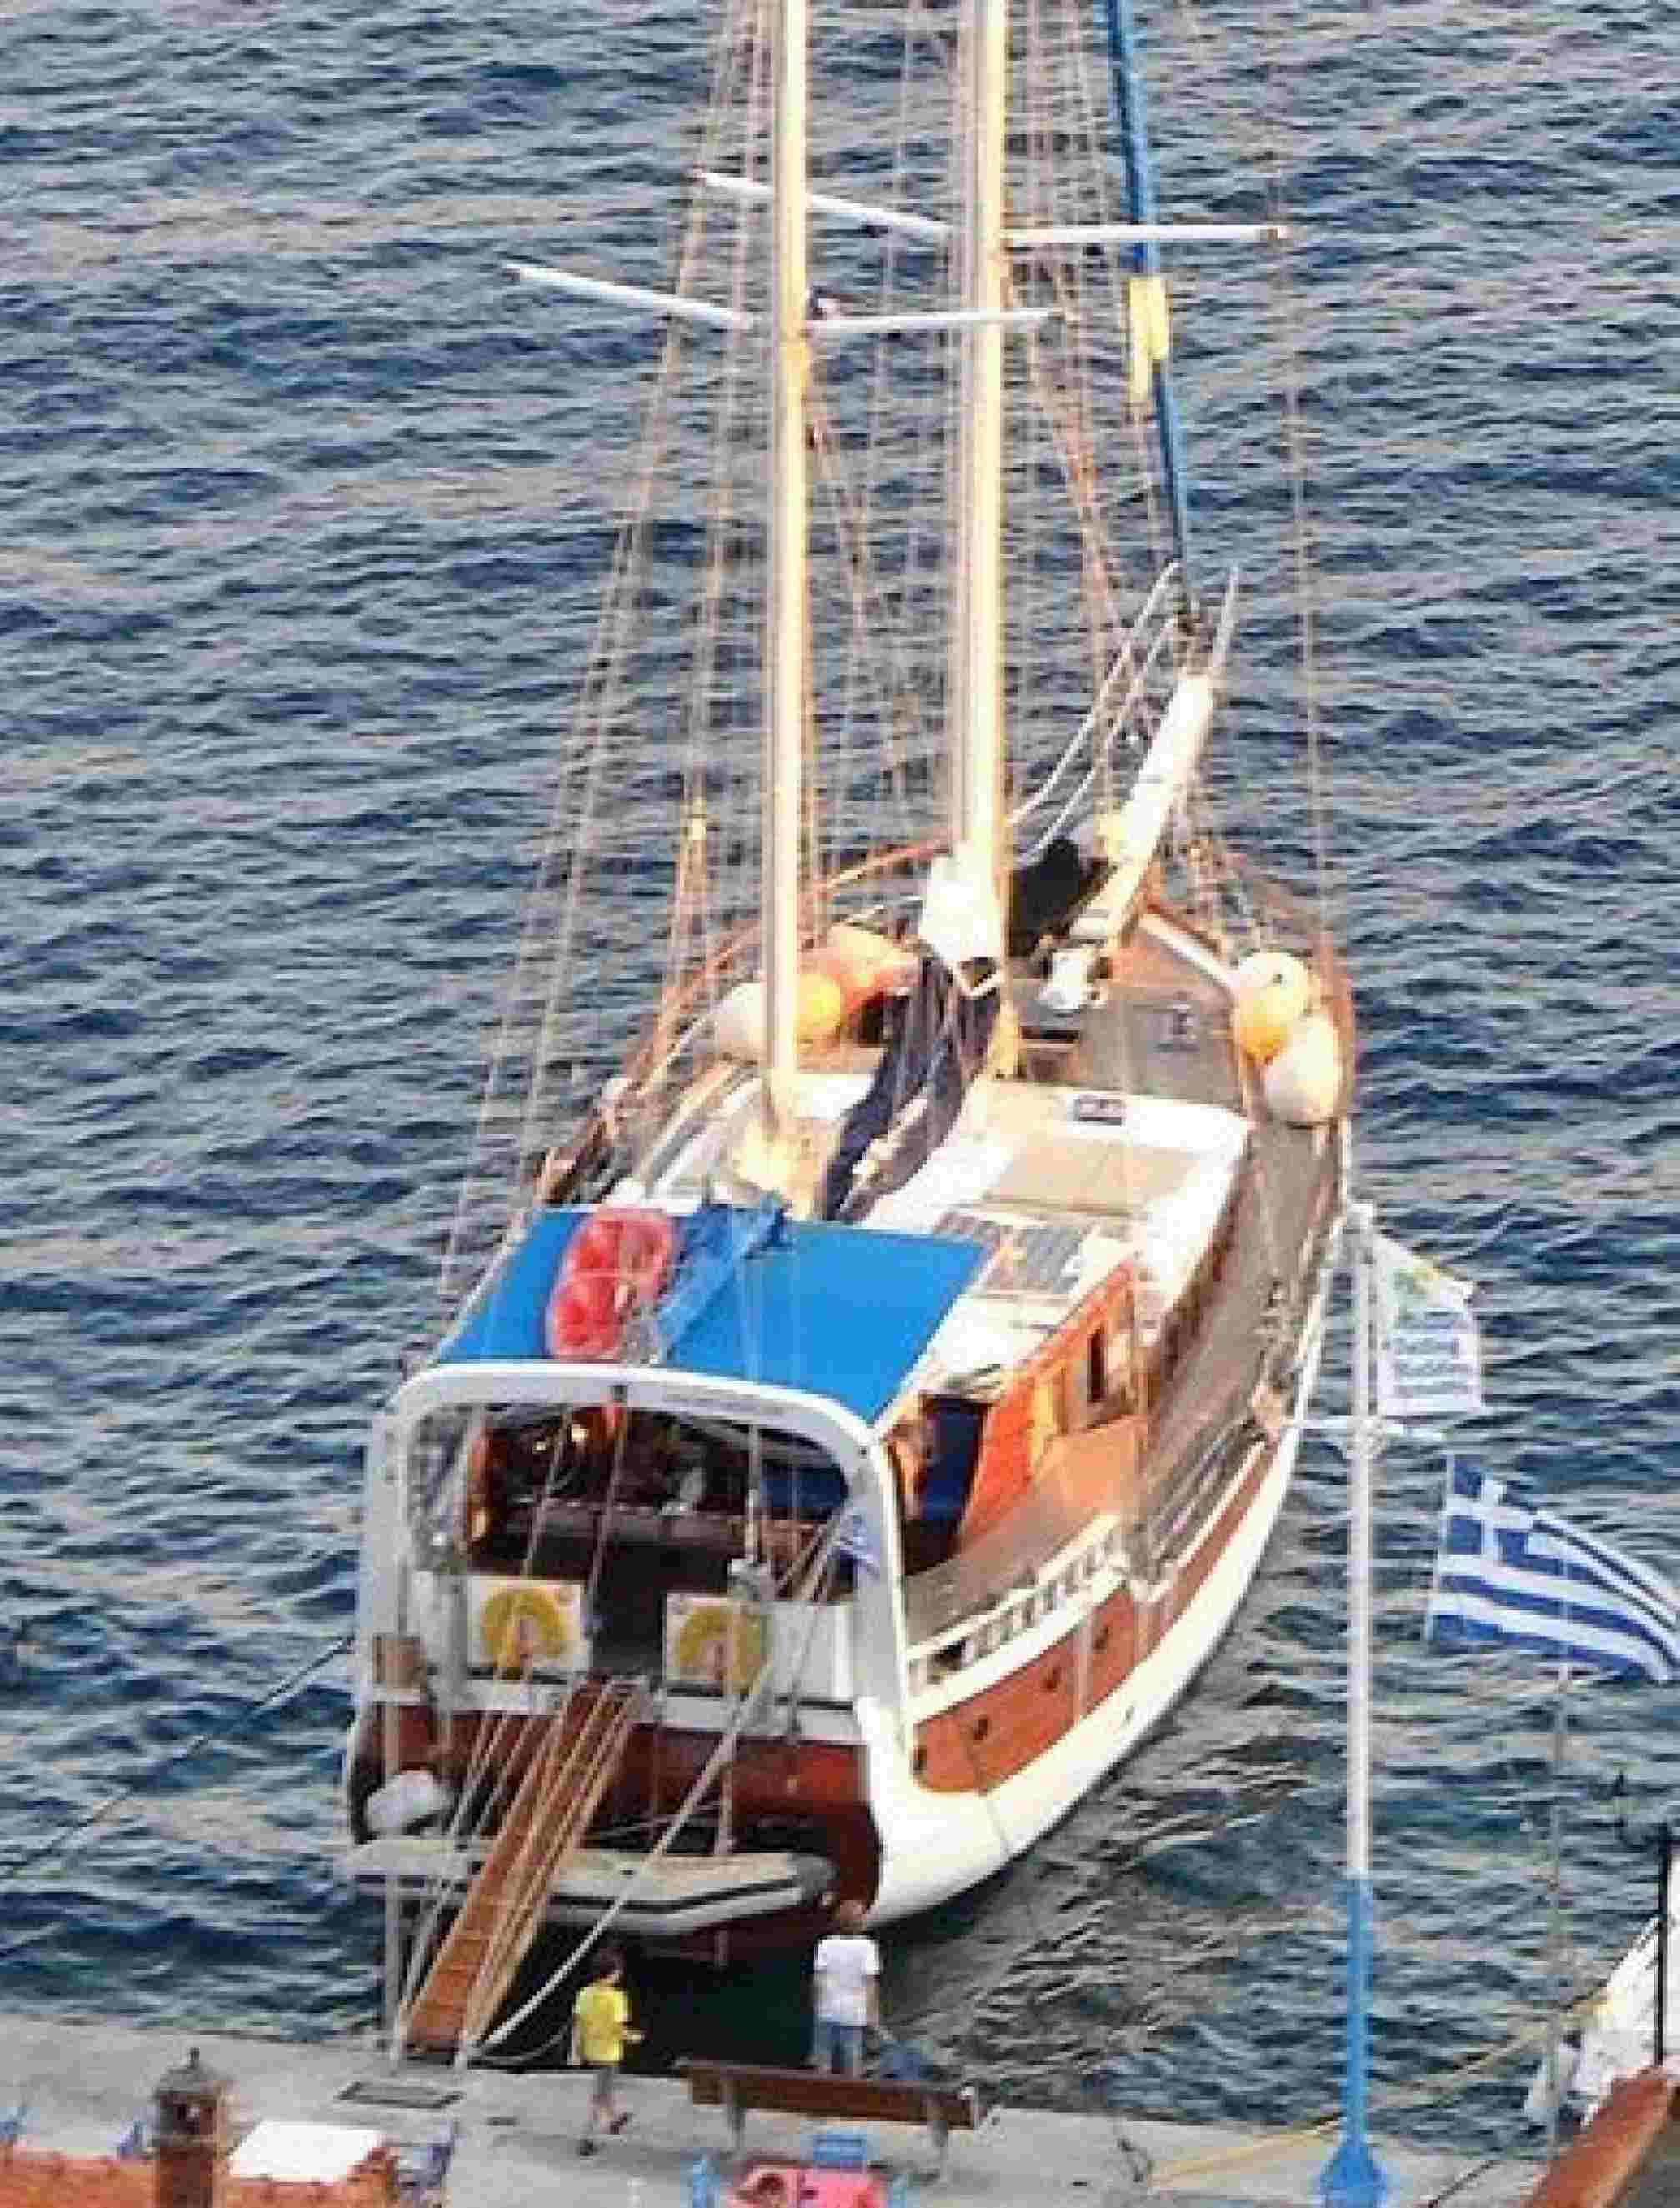 Anatolie gulet charter moored